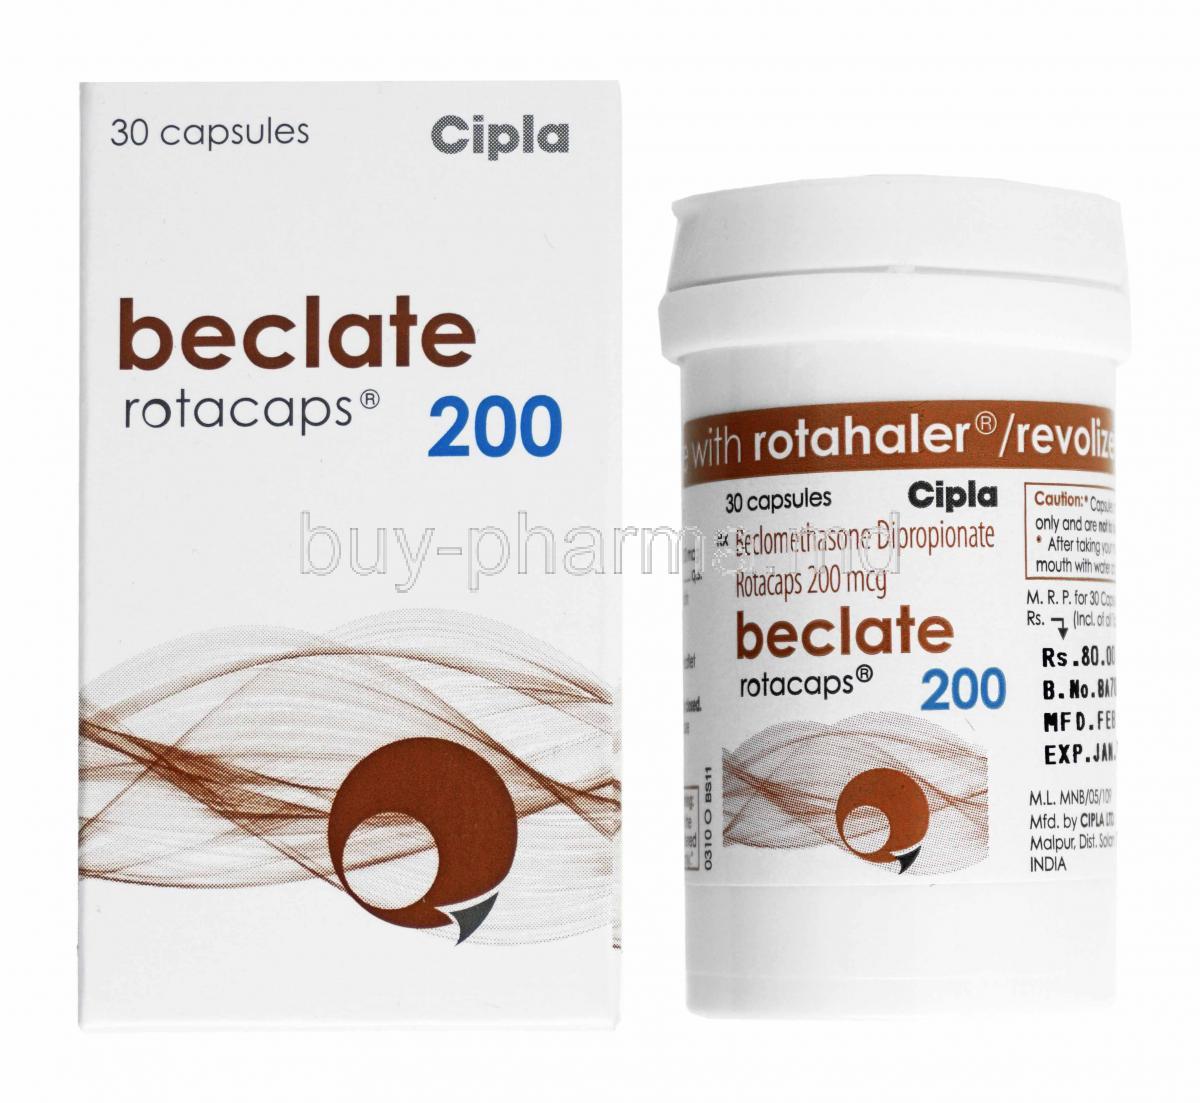 Beclate Rotacap, Beclometasone 200mcg box and container